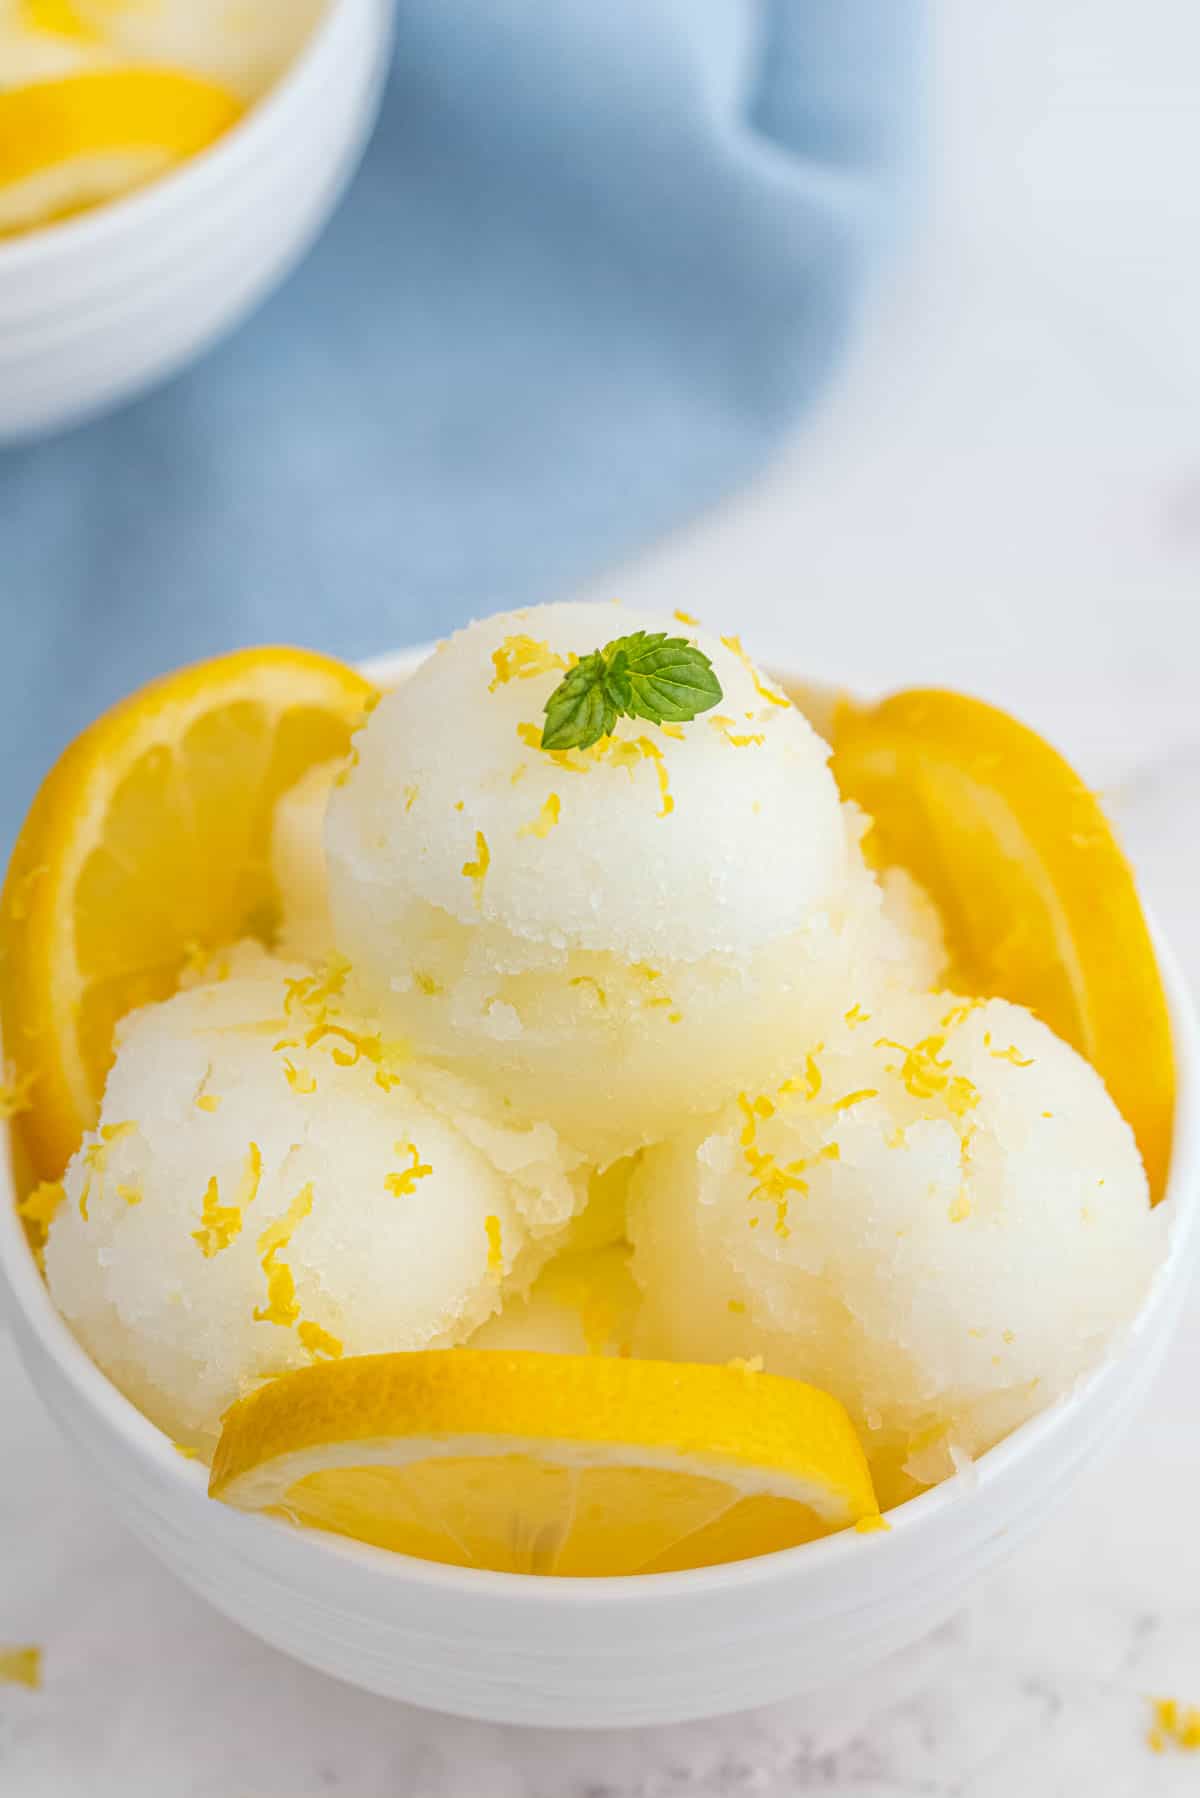 scoops of lemon sorbet in a bowl